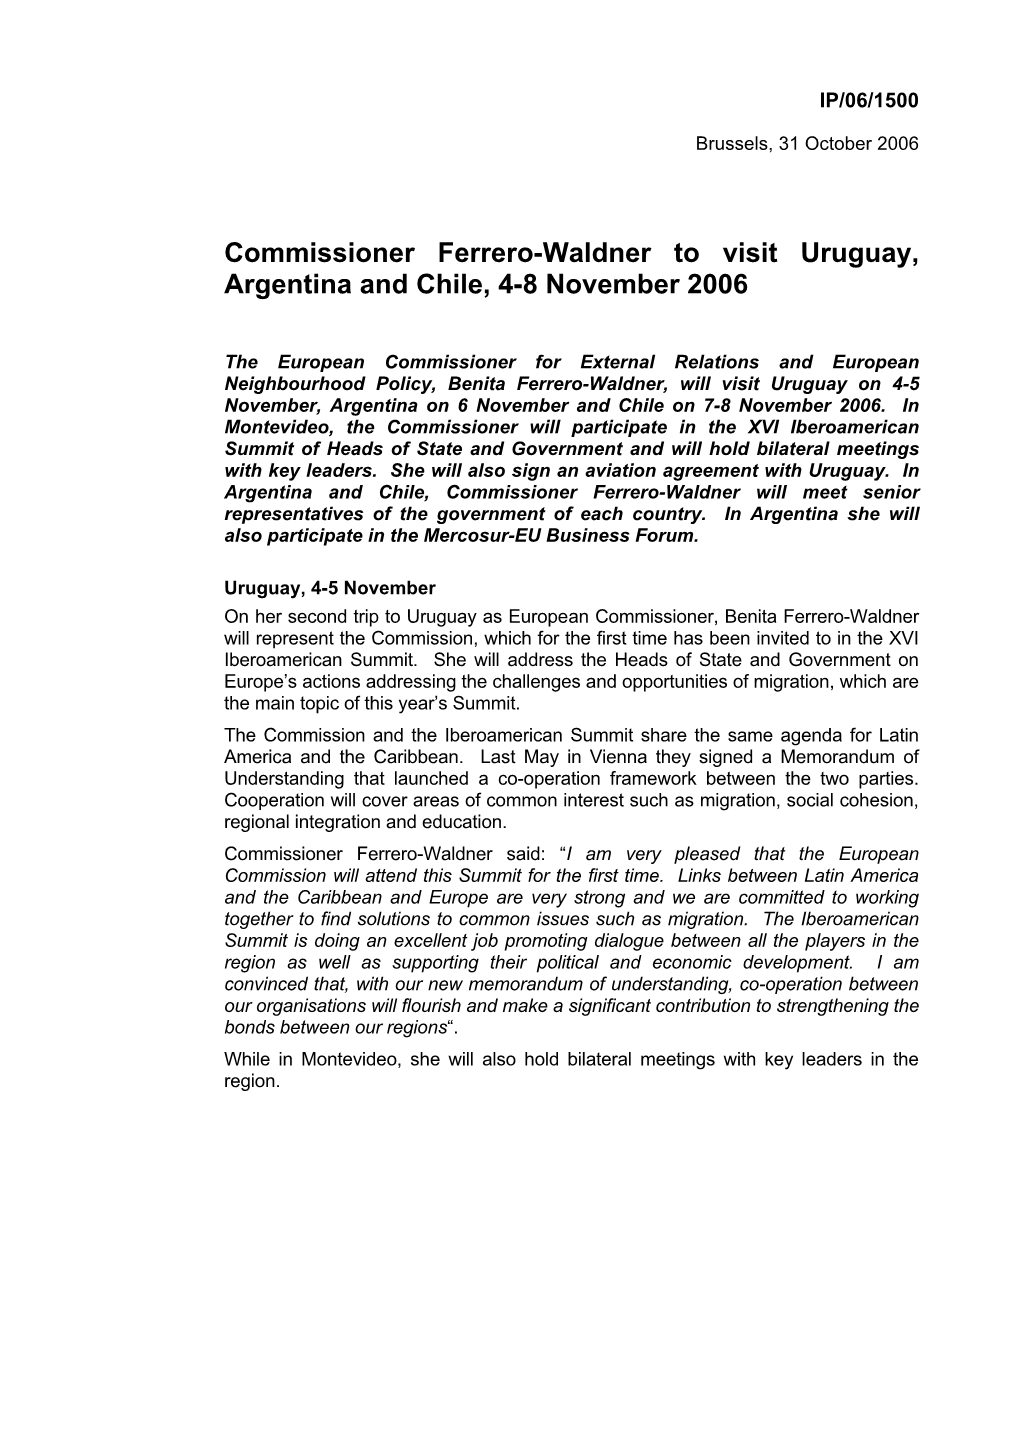 Commissioner Ferrero-Waldner to Visit Uruguay, Argentina and Chile, 4-8 November 2006